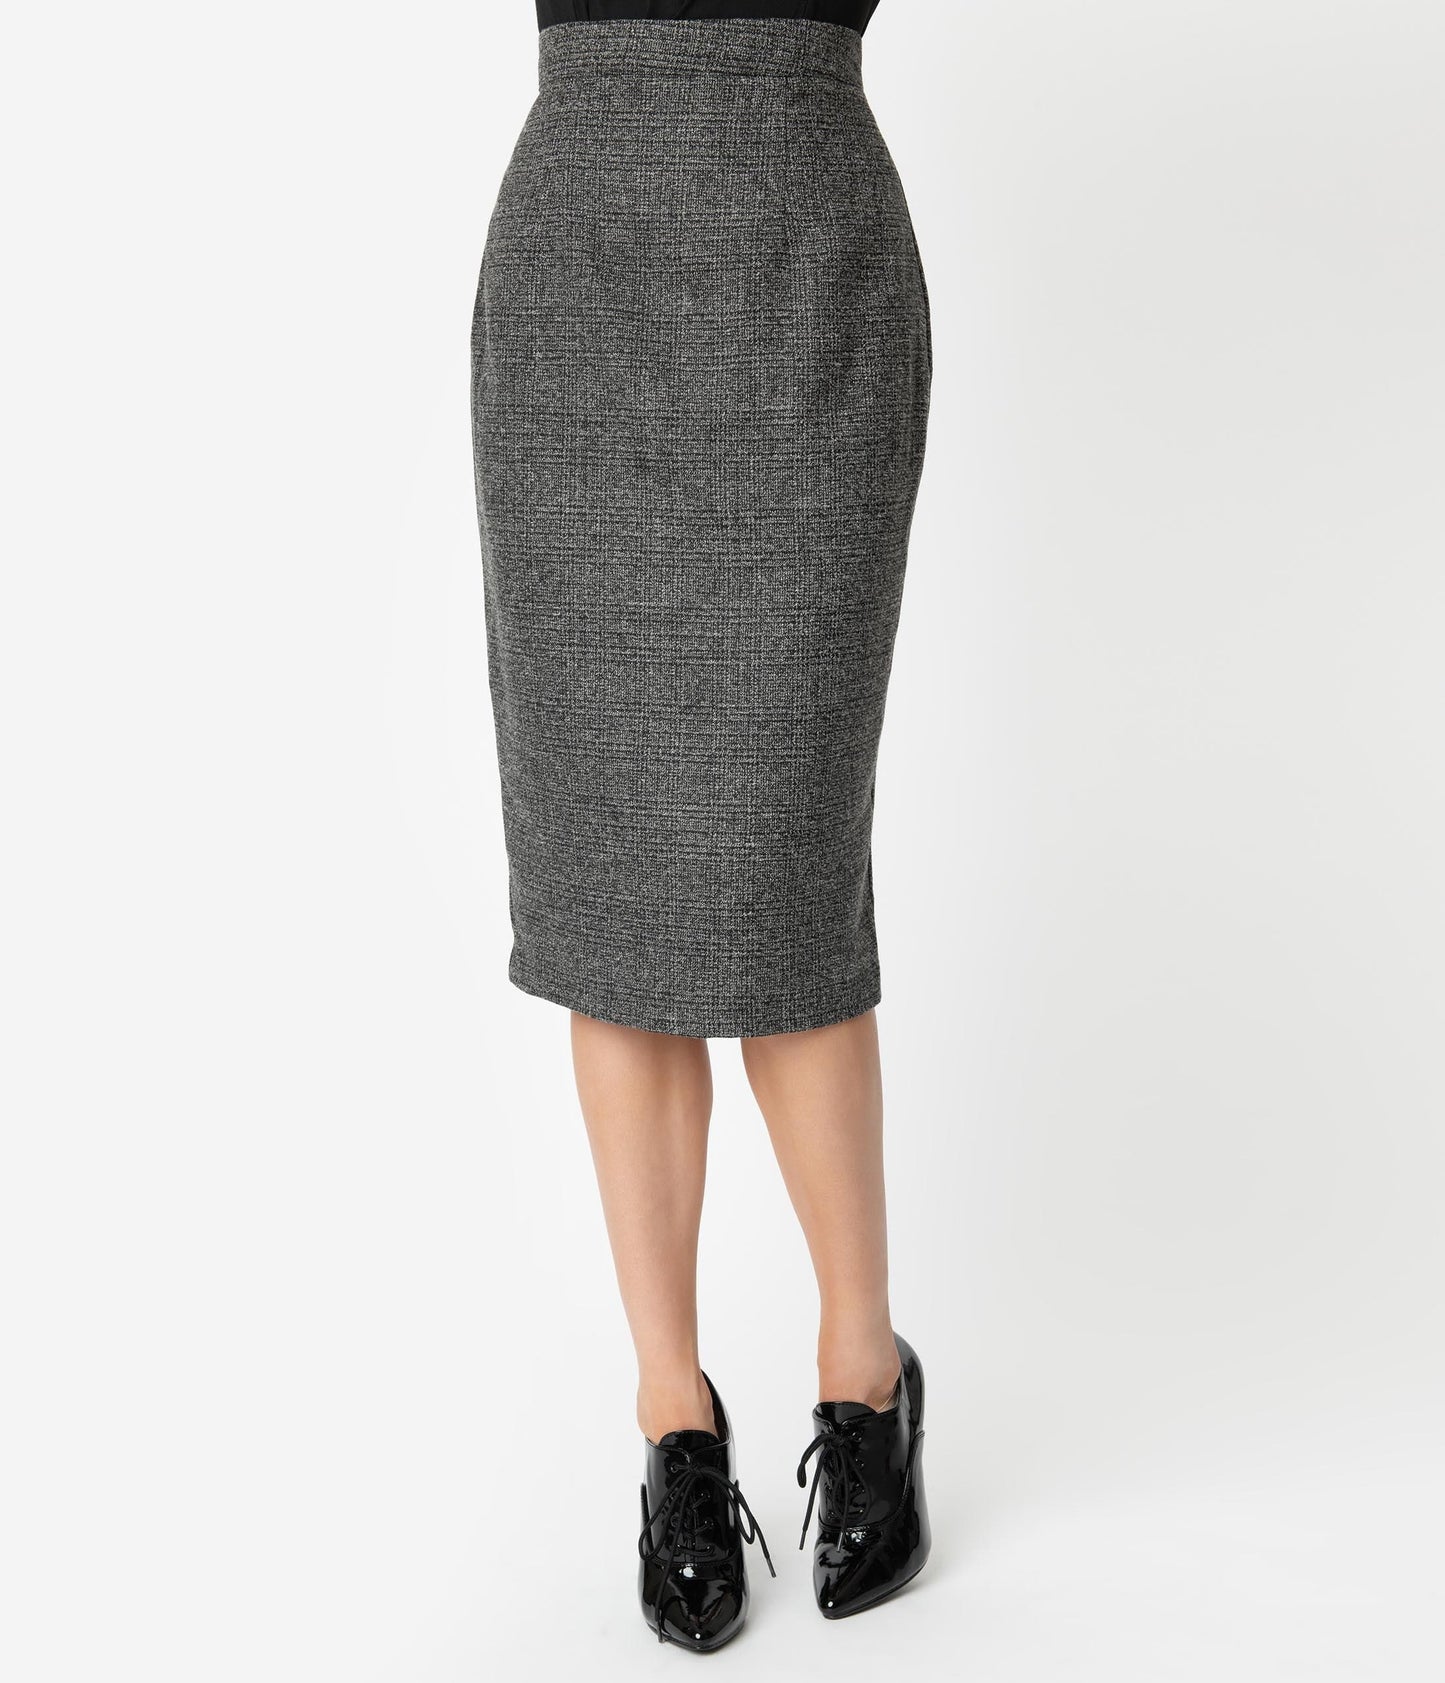 Micheline Pitt For Unique Vintage Grey Tweed Rachael Suit Wiggle Skirt